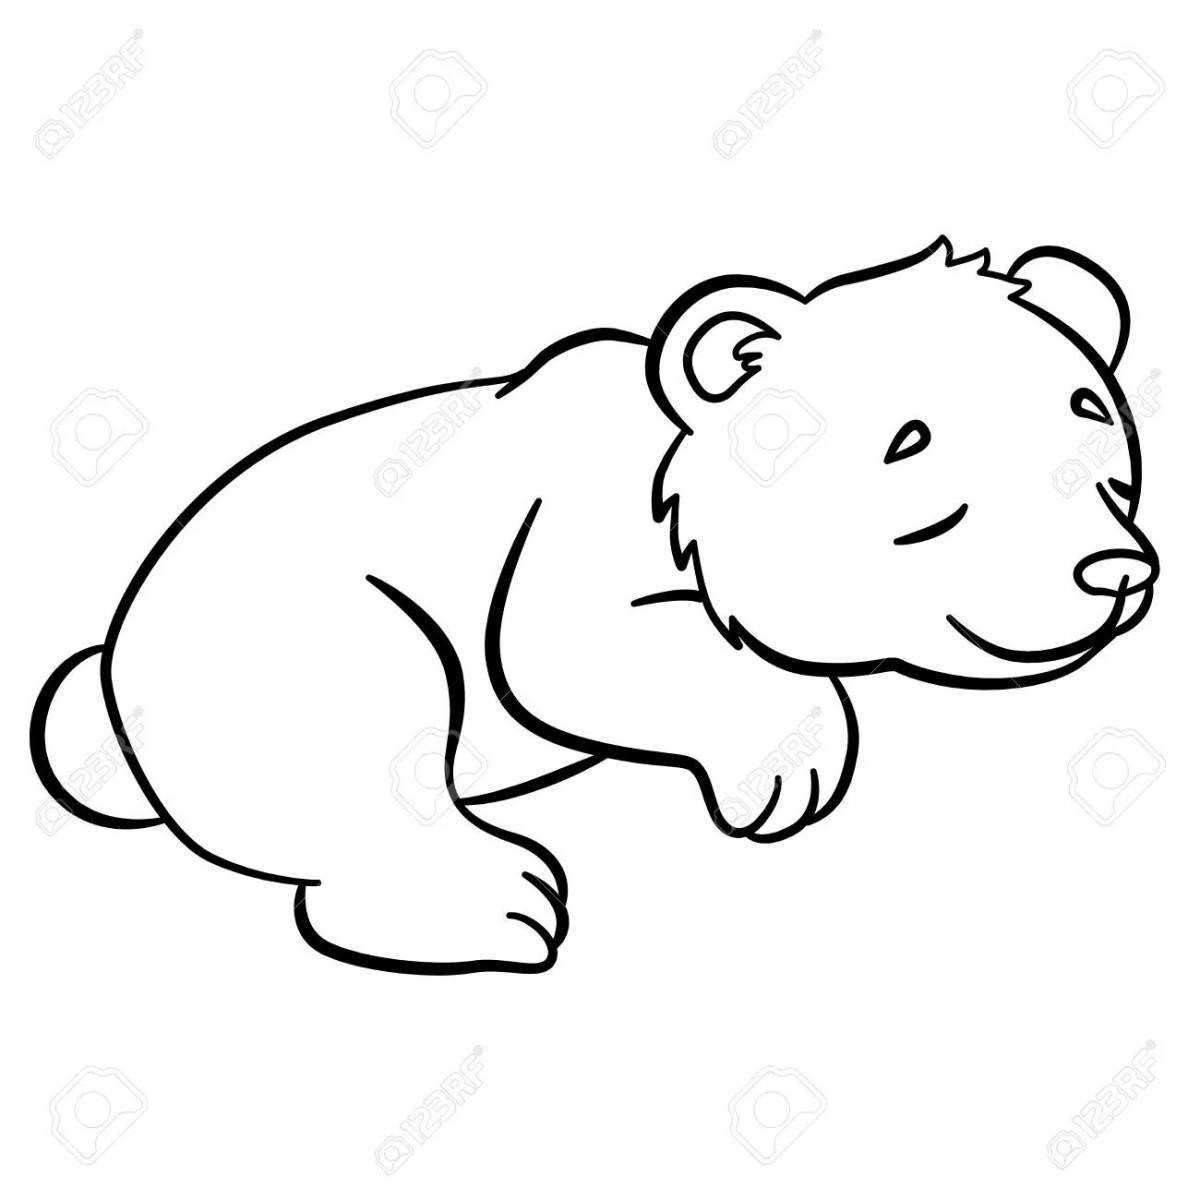 Fairytale bear den coloring book for kids